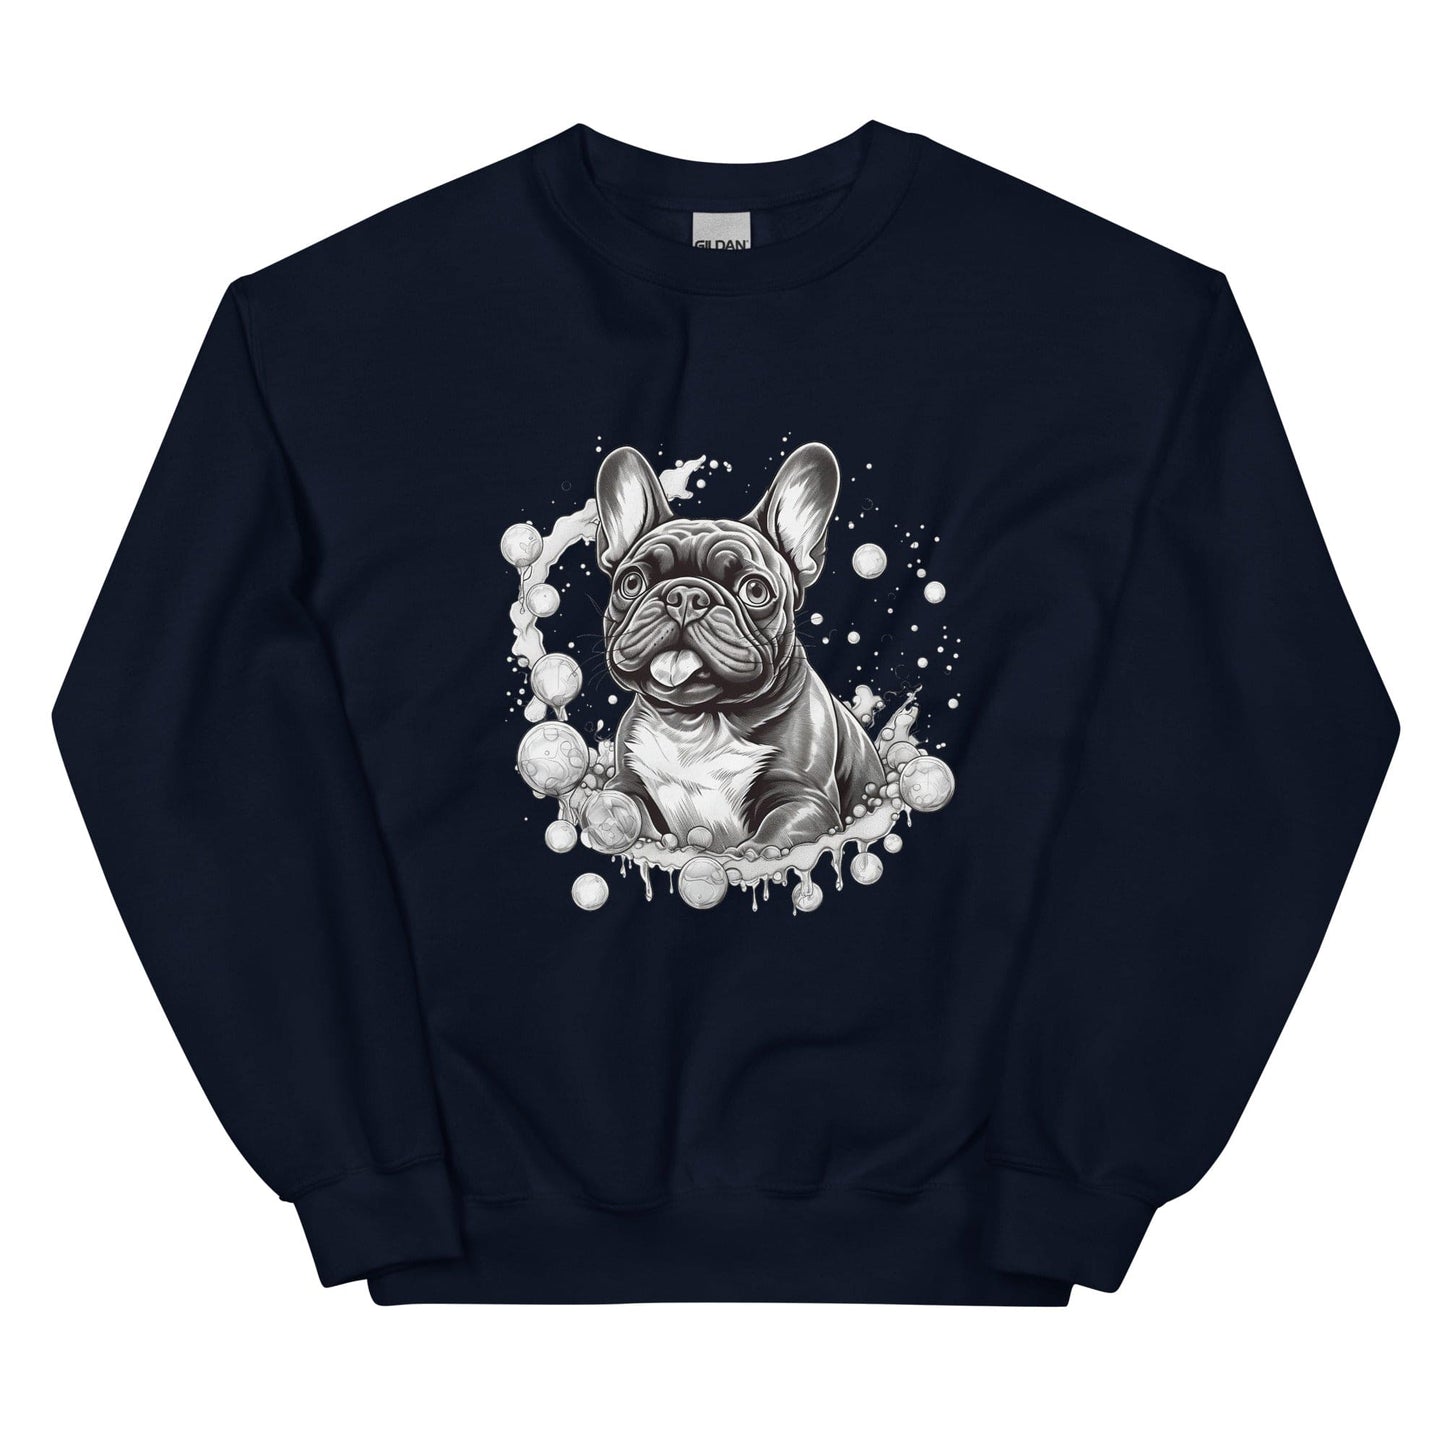 "Bubbles French Bulldog" - Unisex Sweater